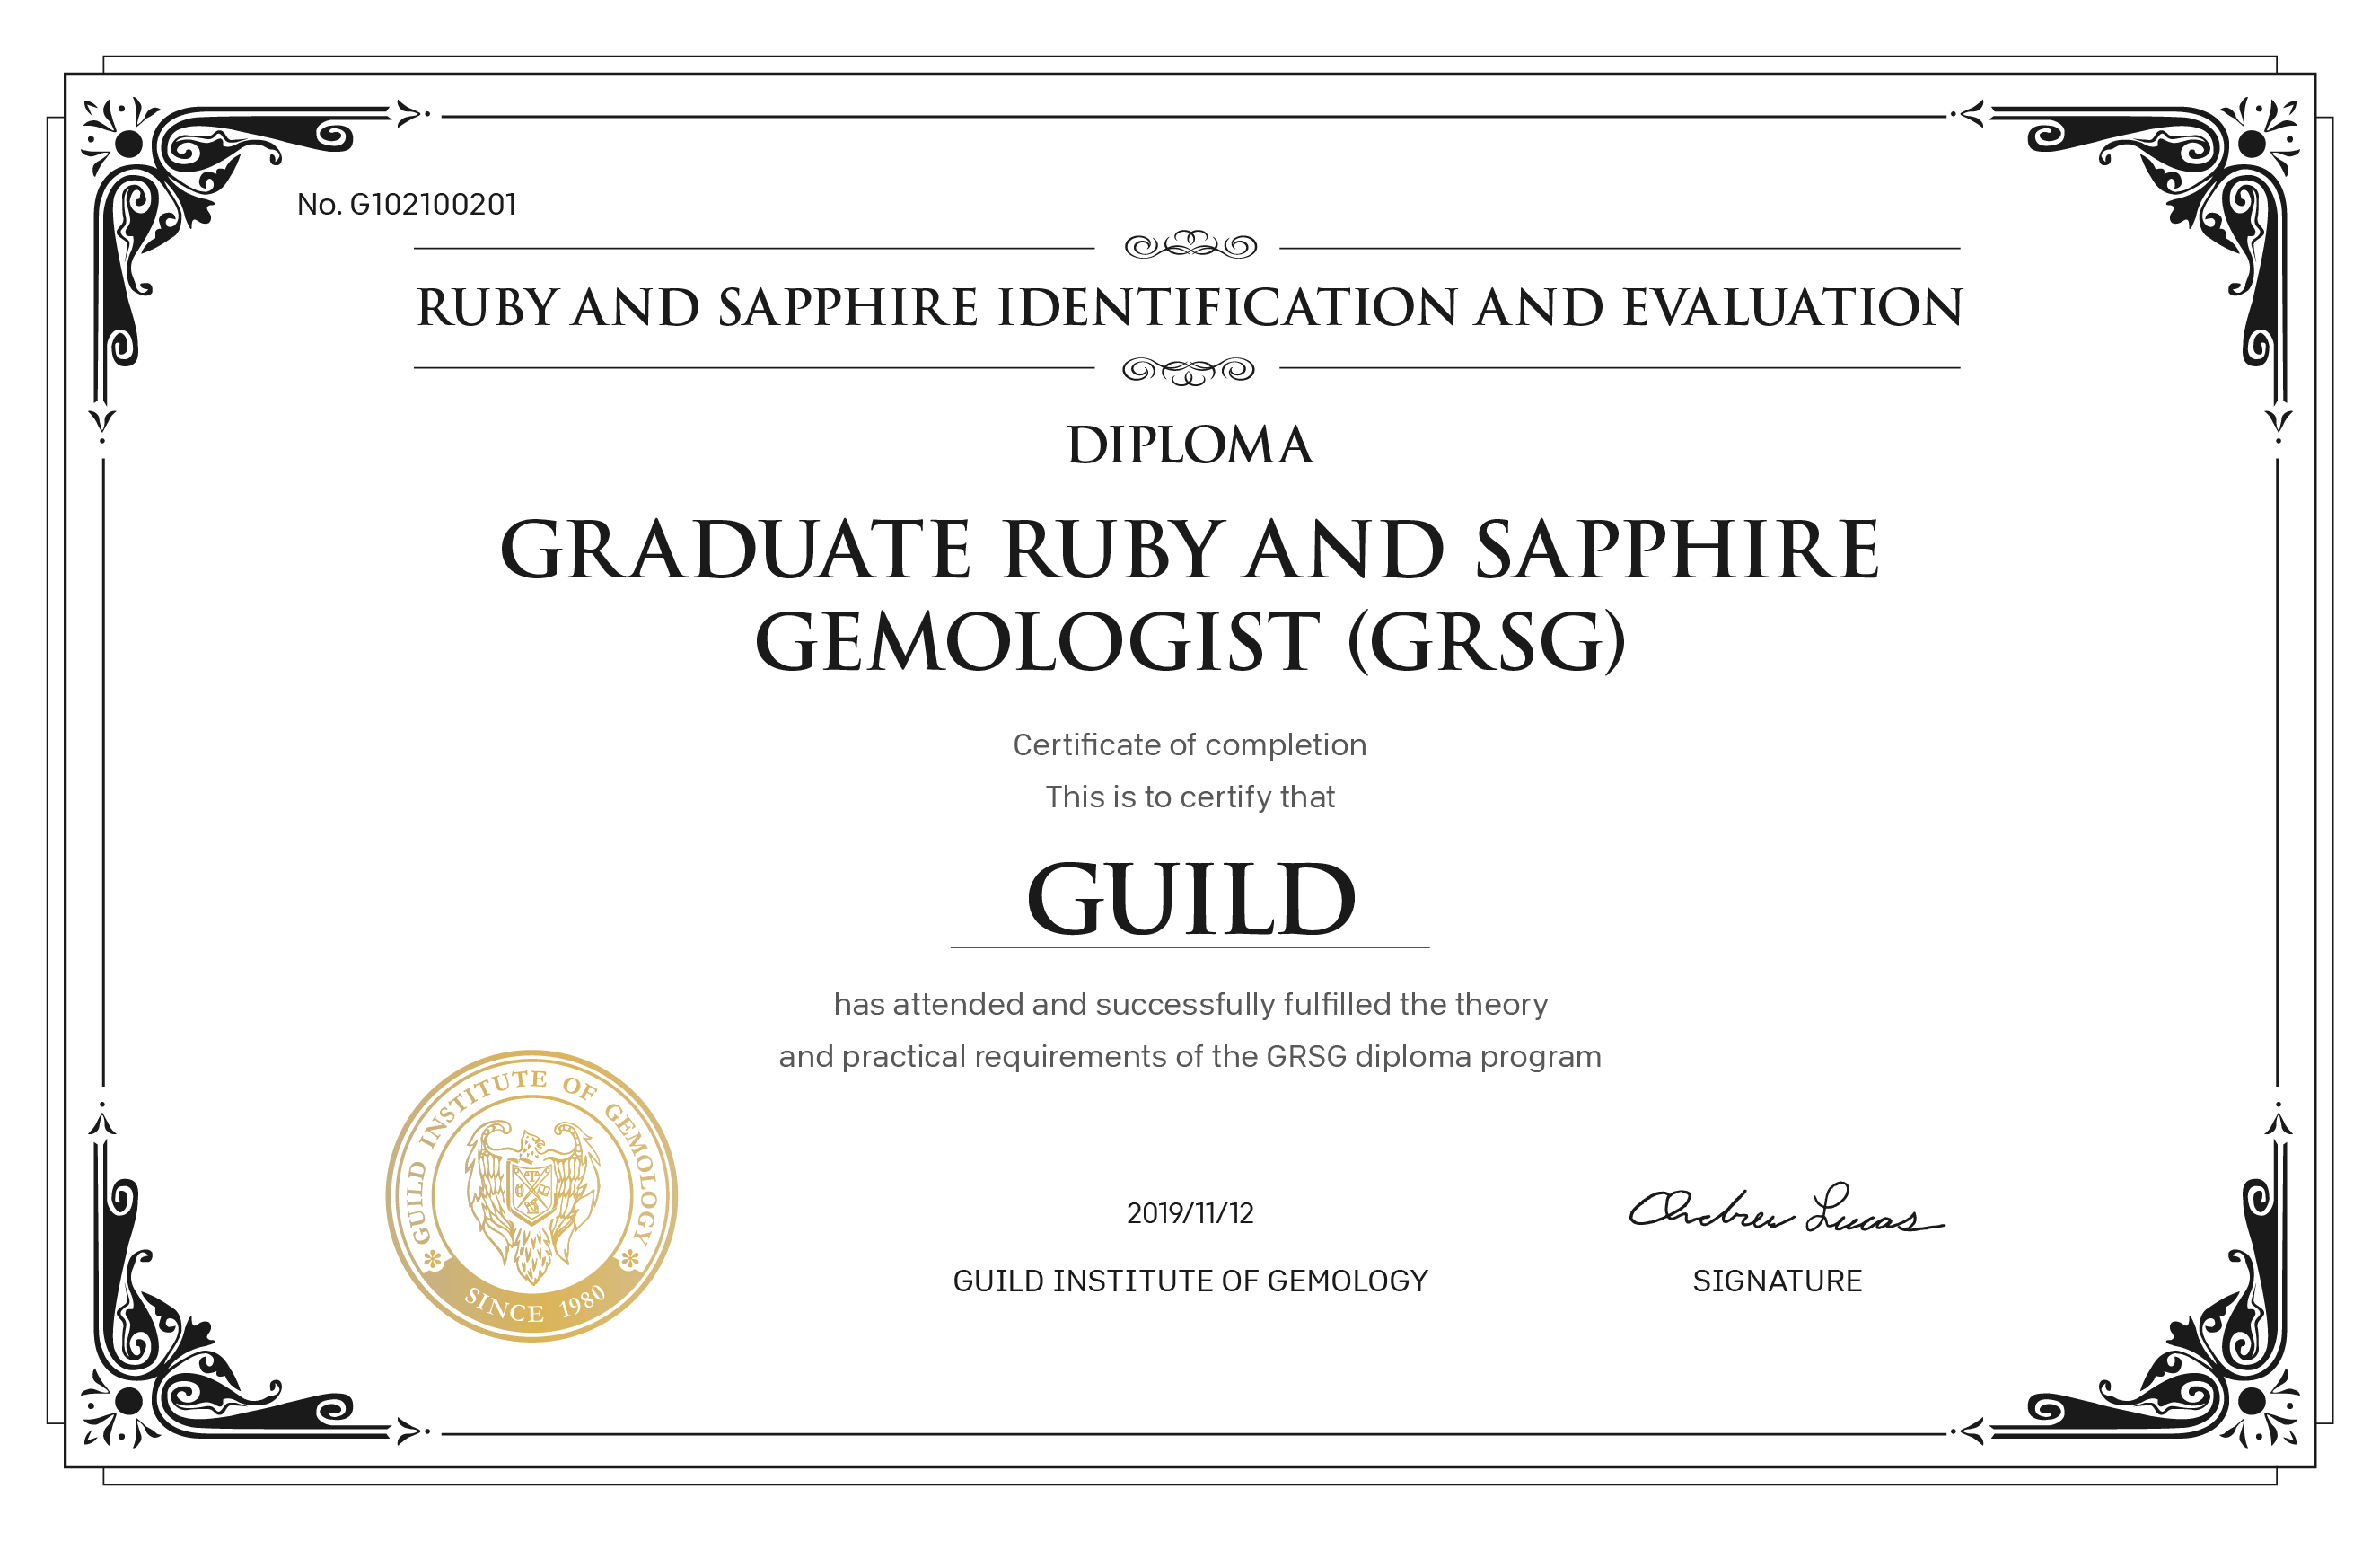 Graduate Ruby and Sapphire Gemologist